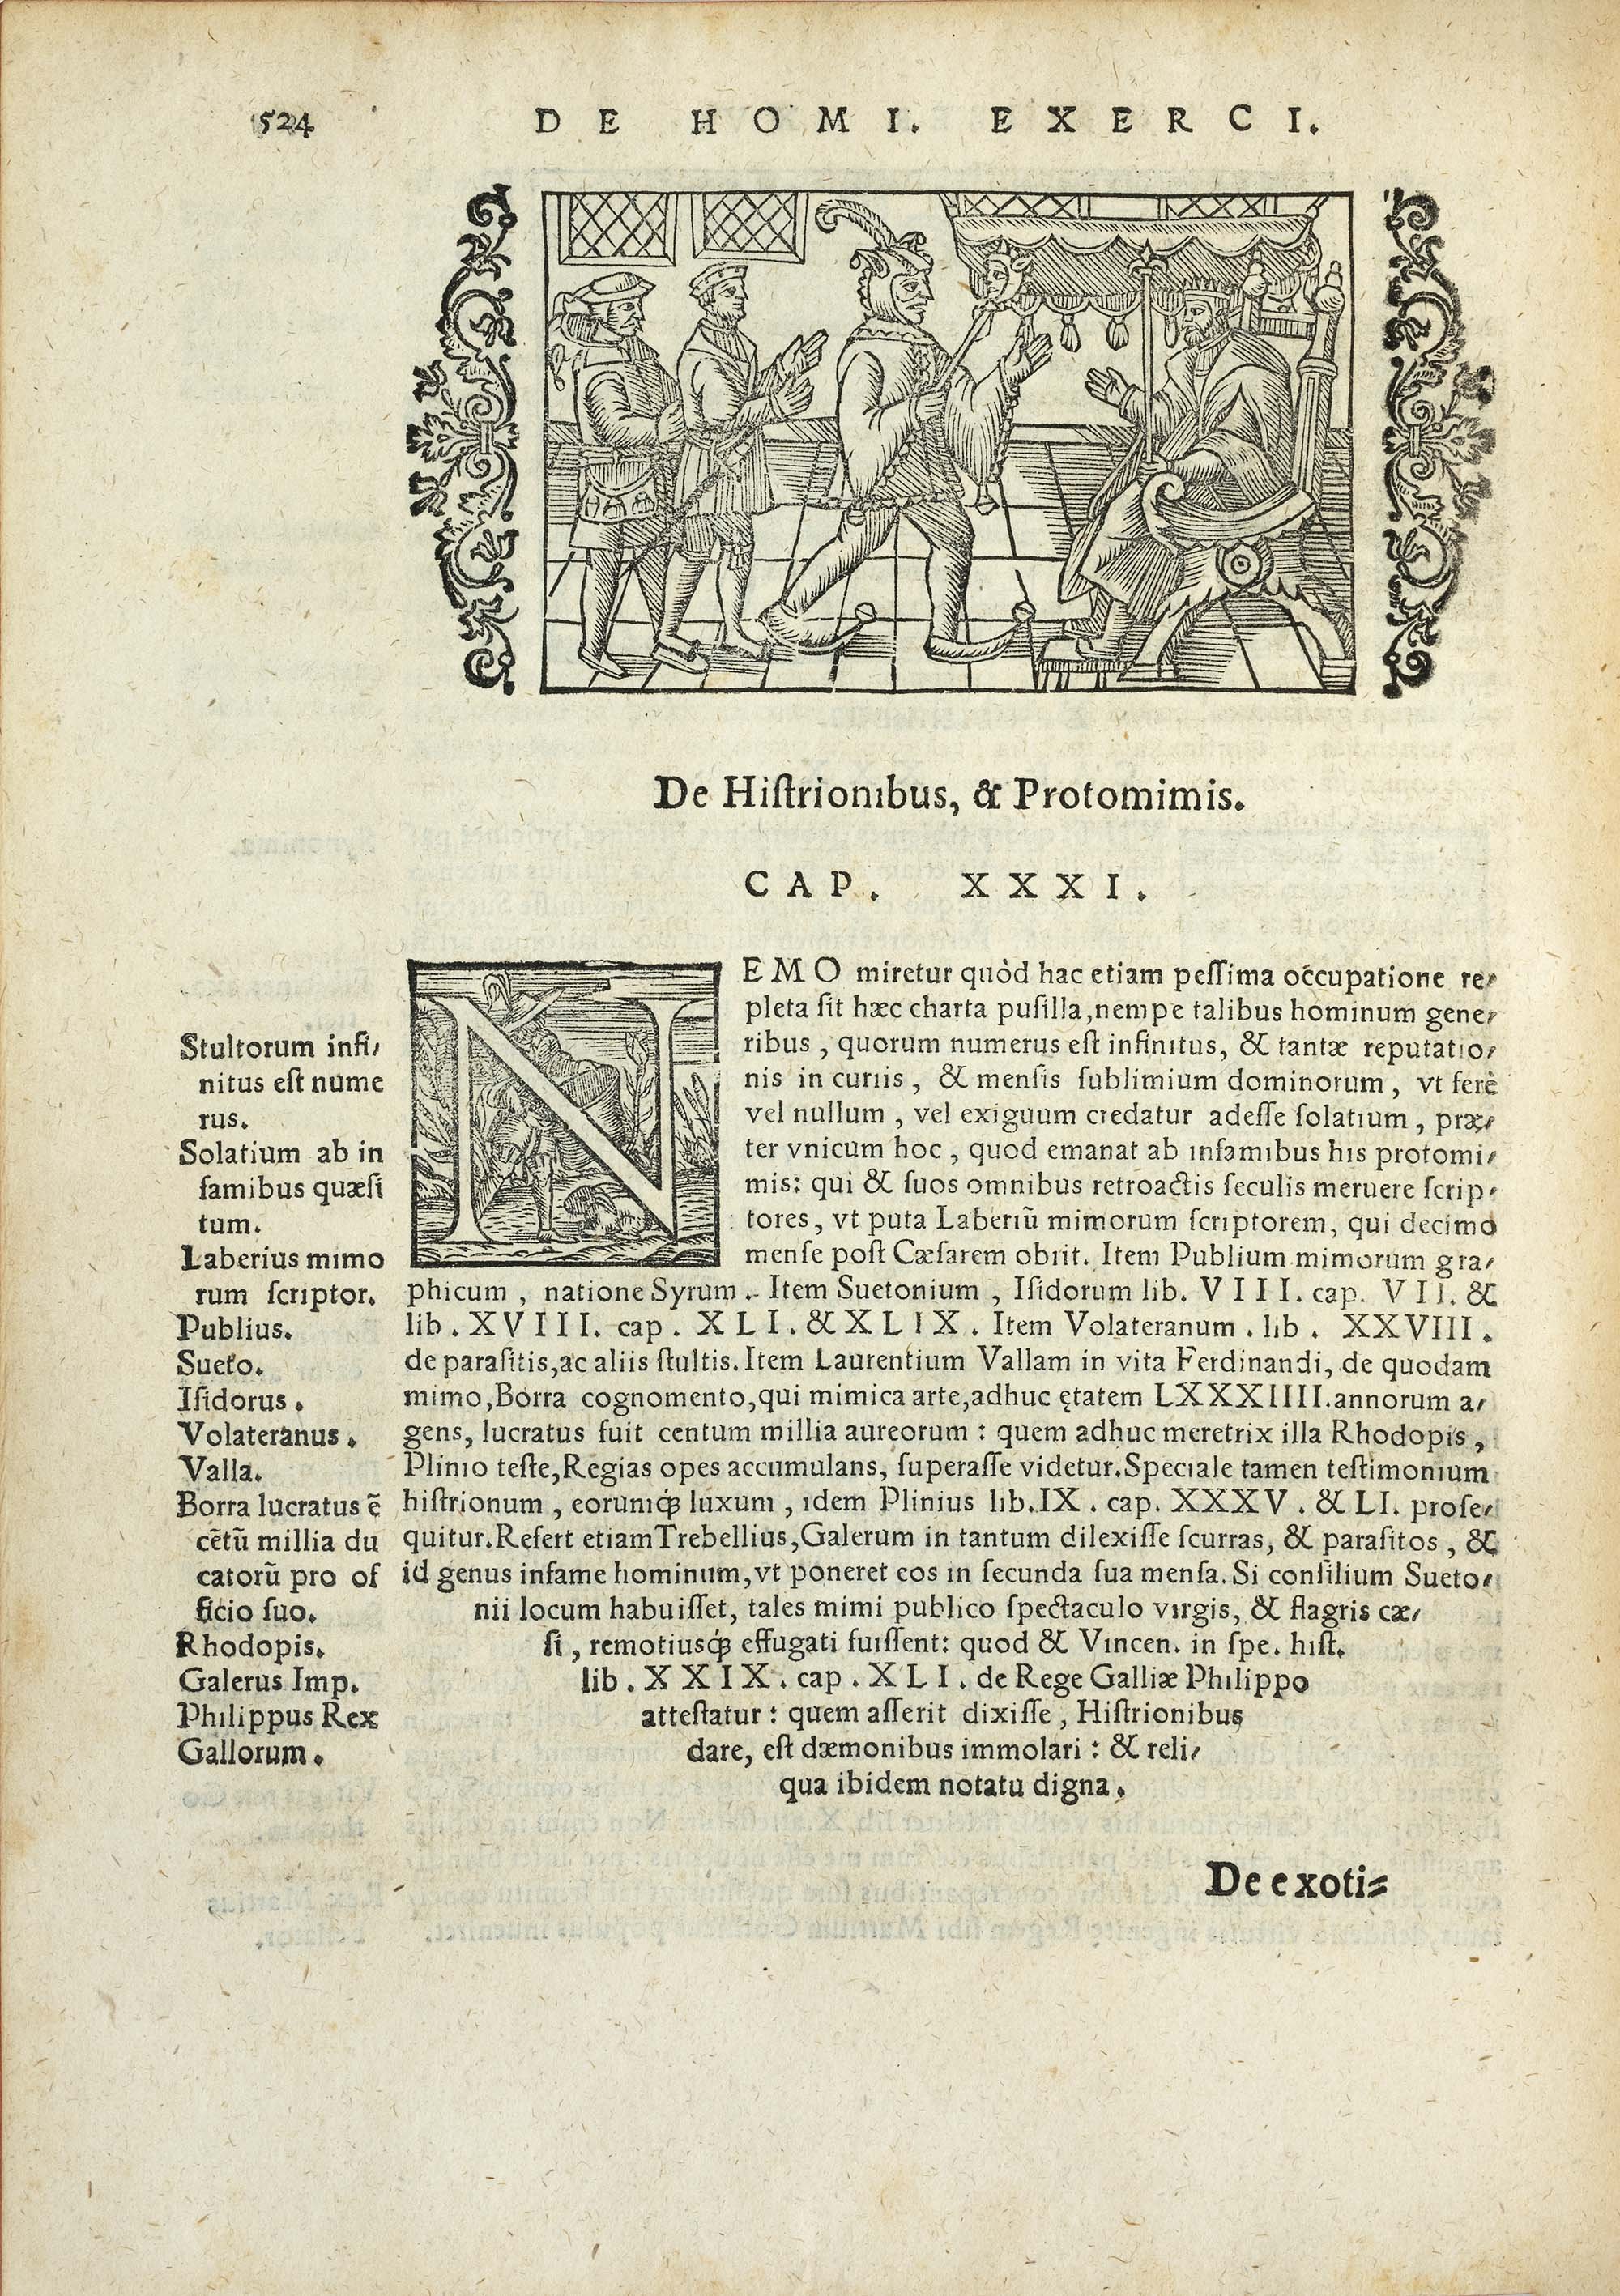 Olaus-Magnus-Historia-scandinavia-1555-first-edition-brunck-jeanson-36.jpg